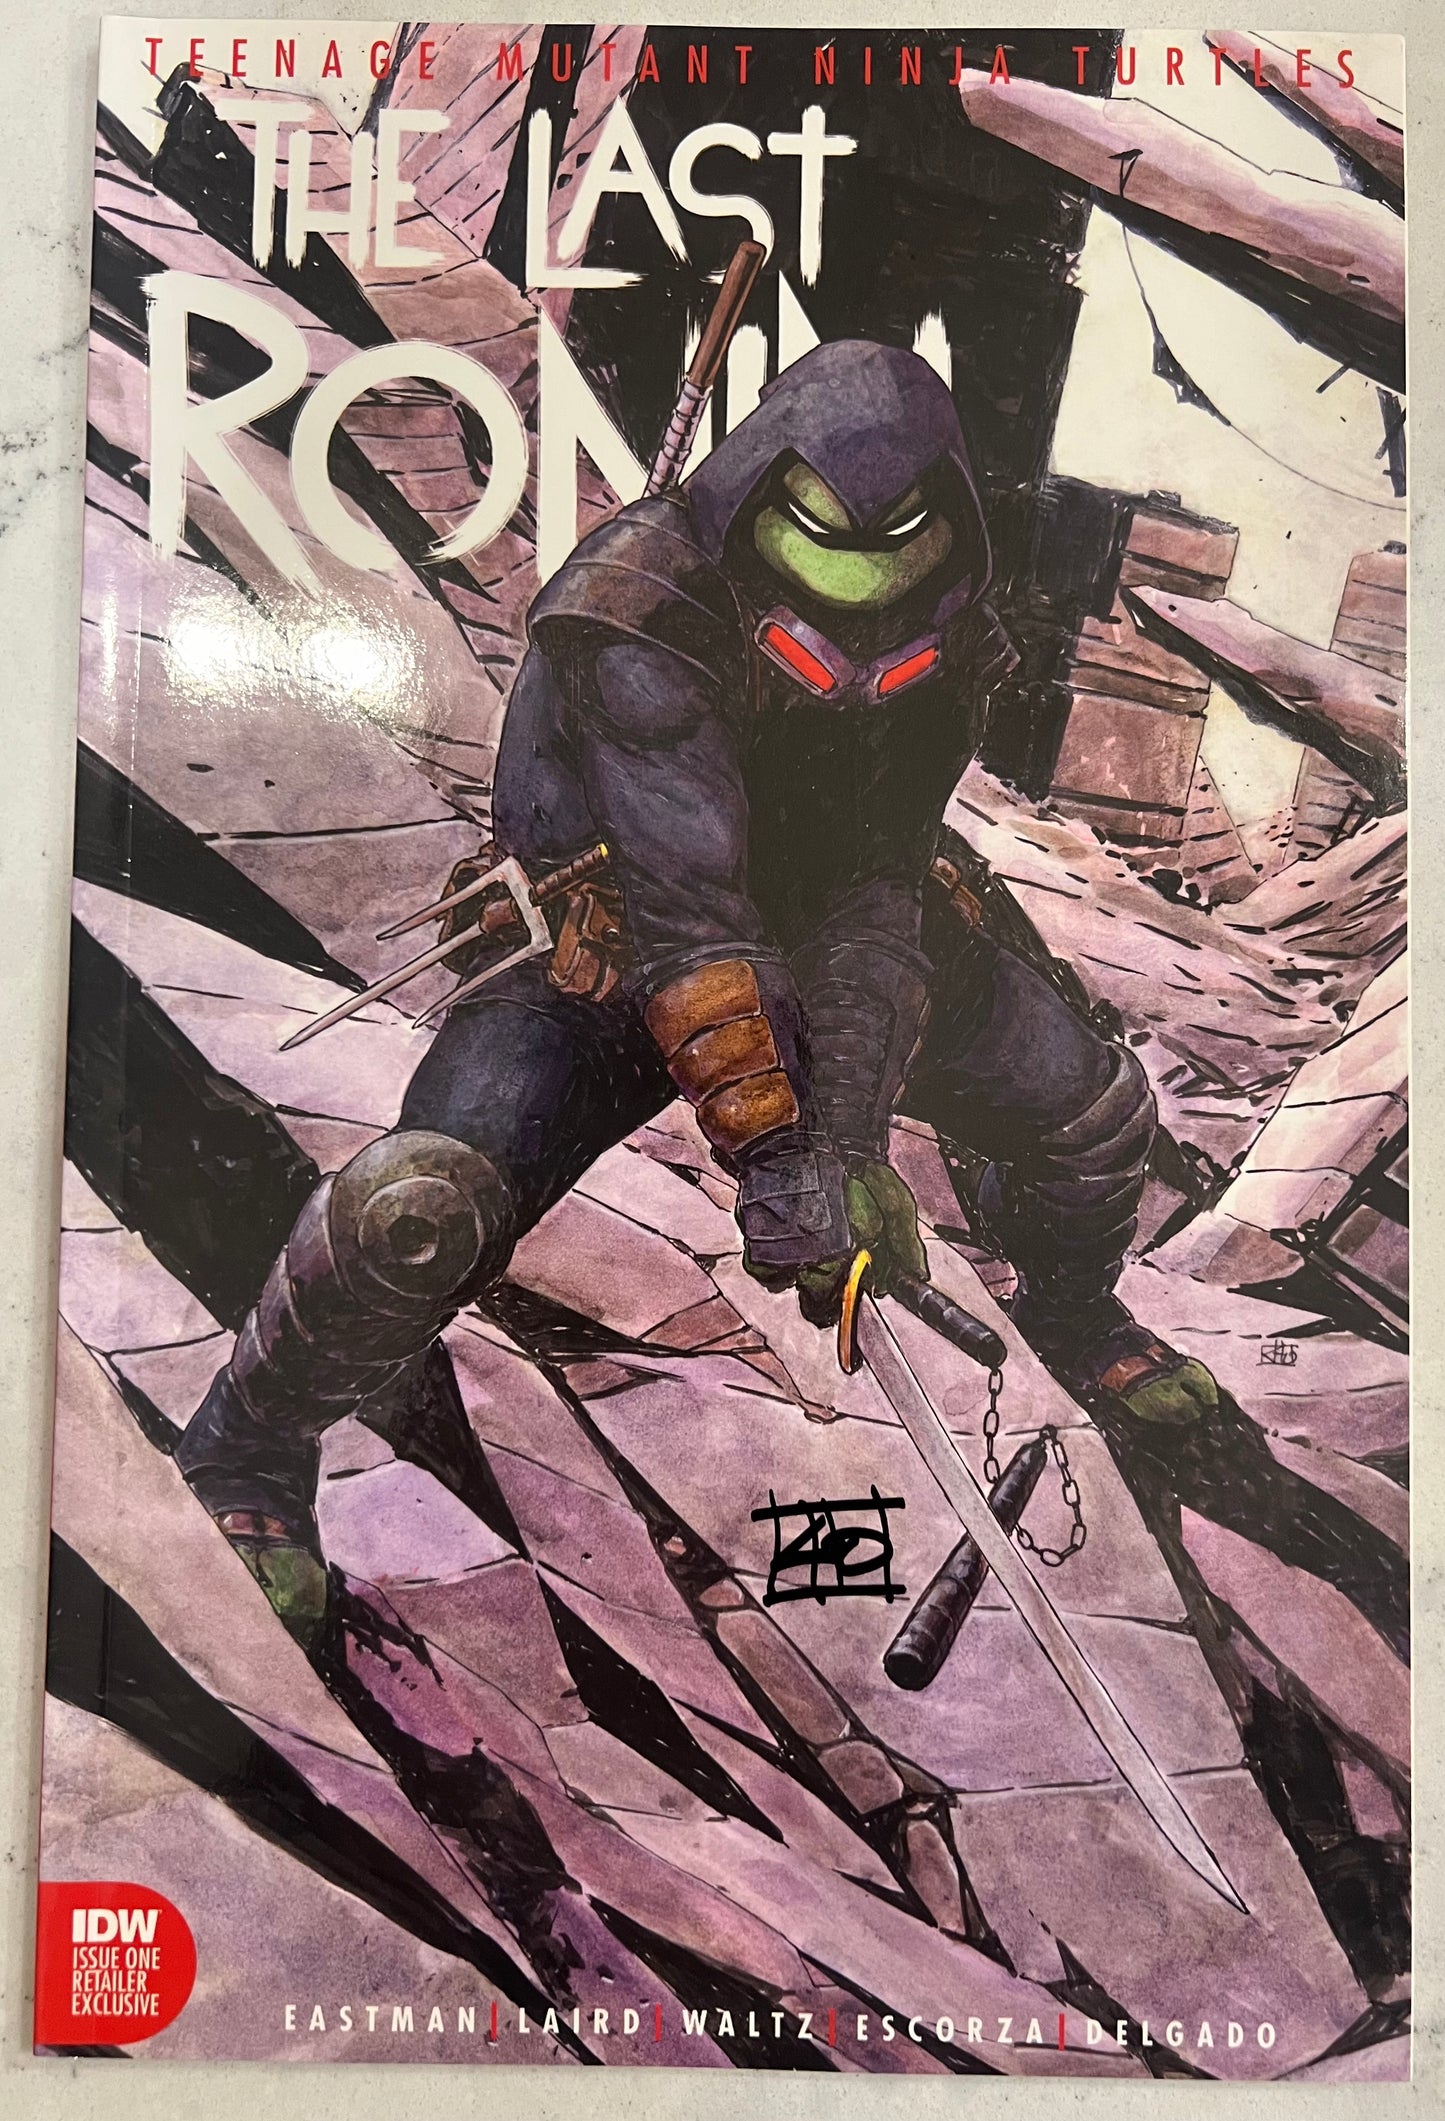 Teenage Mutant Ninja Turtles the Last Ronin #1 (Retailer Exclusive The Comics Vault Altoona Virgin Variant by Khoi Pham) Signed by Khoi Pham